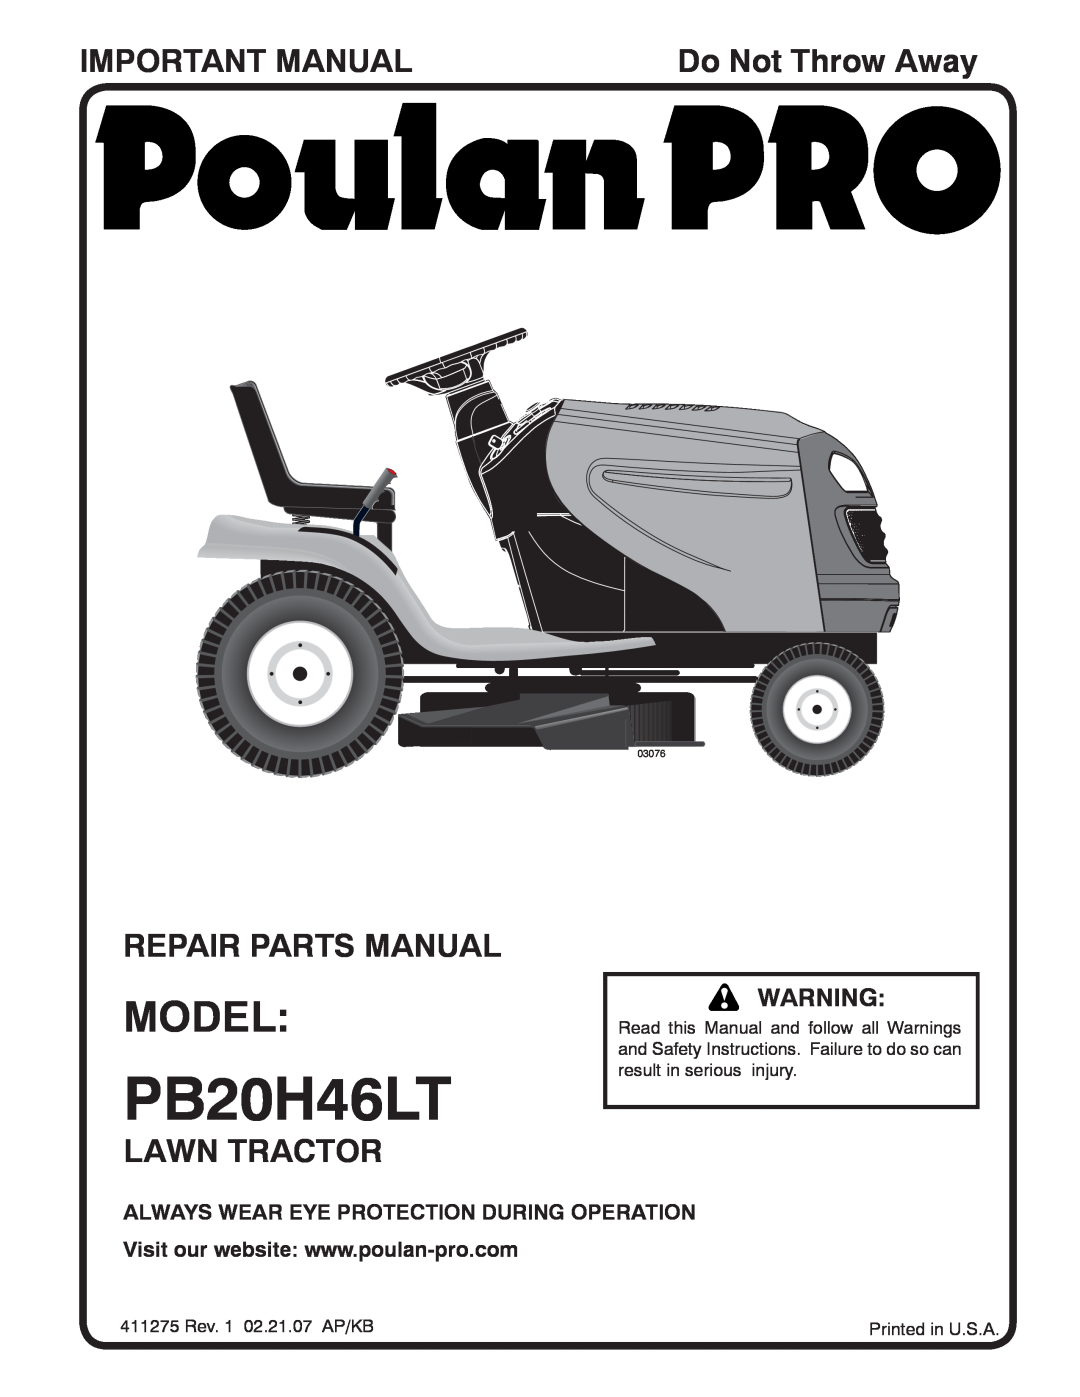 Poulan PB20H46LT manual Model, Important Manual, Repair Parts Manual, Lawn Tractor, Do Not Throw Away 